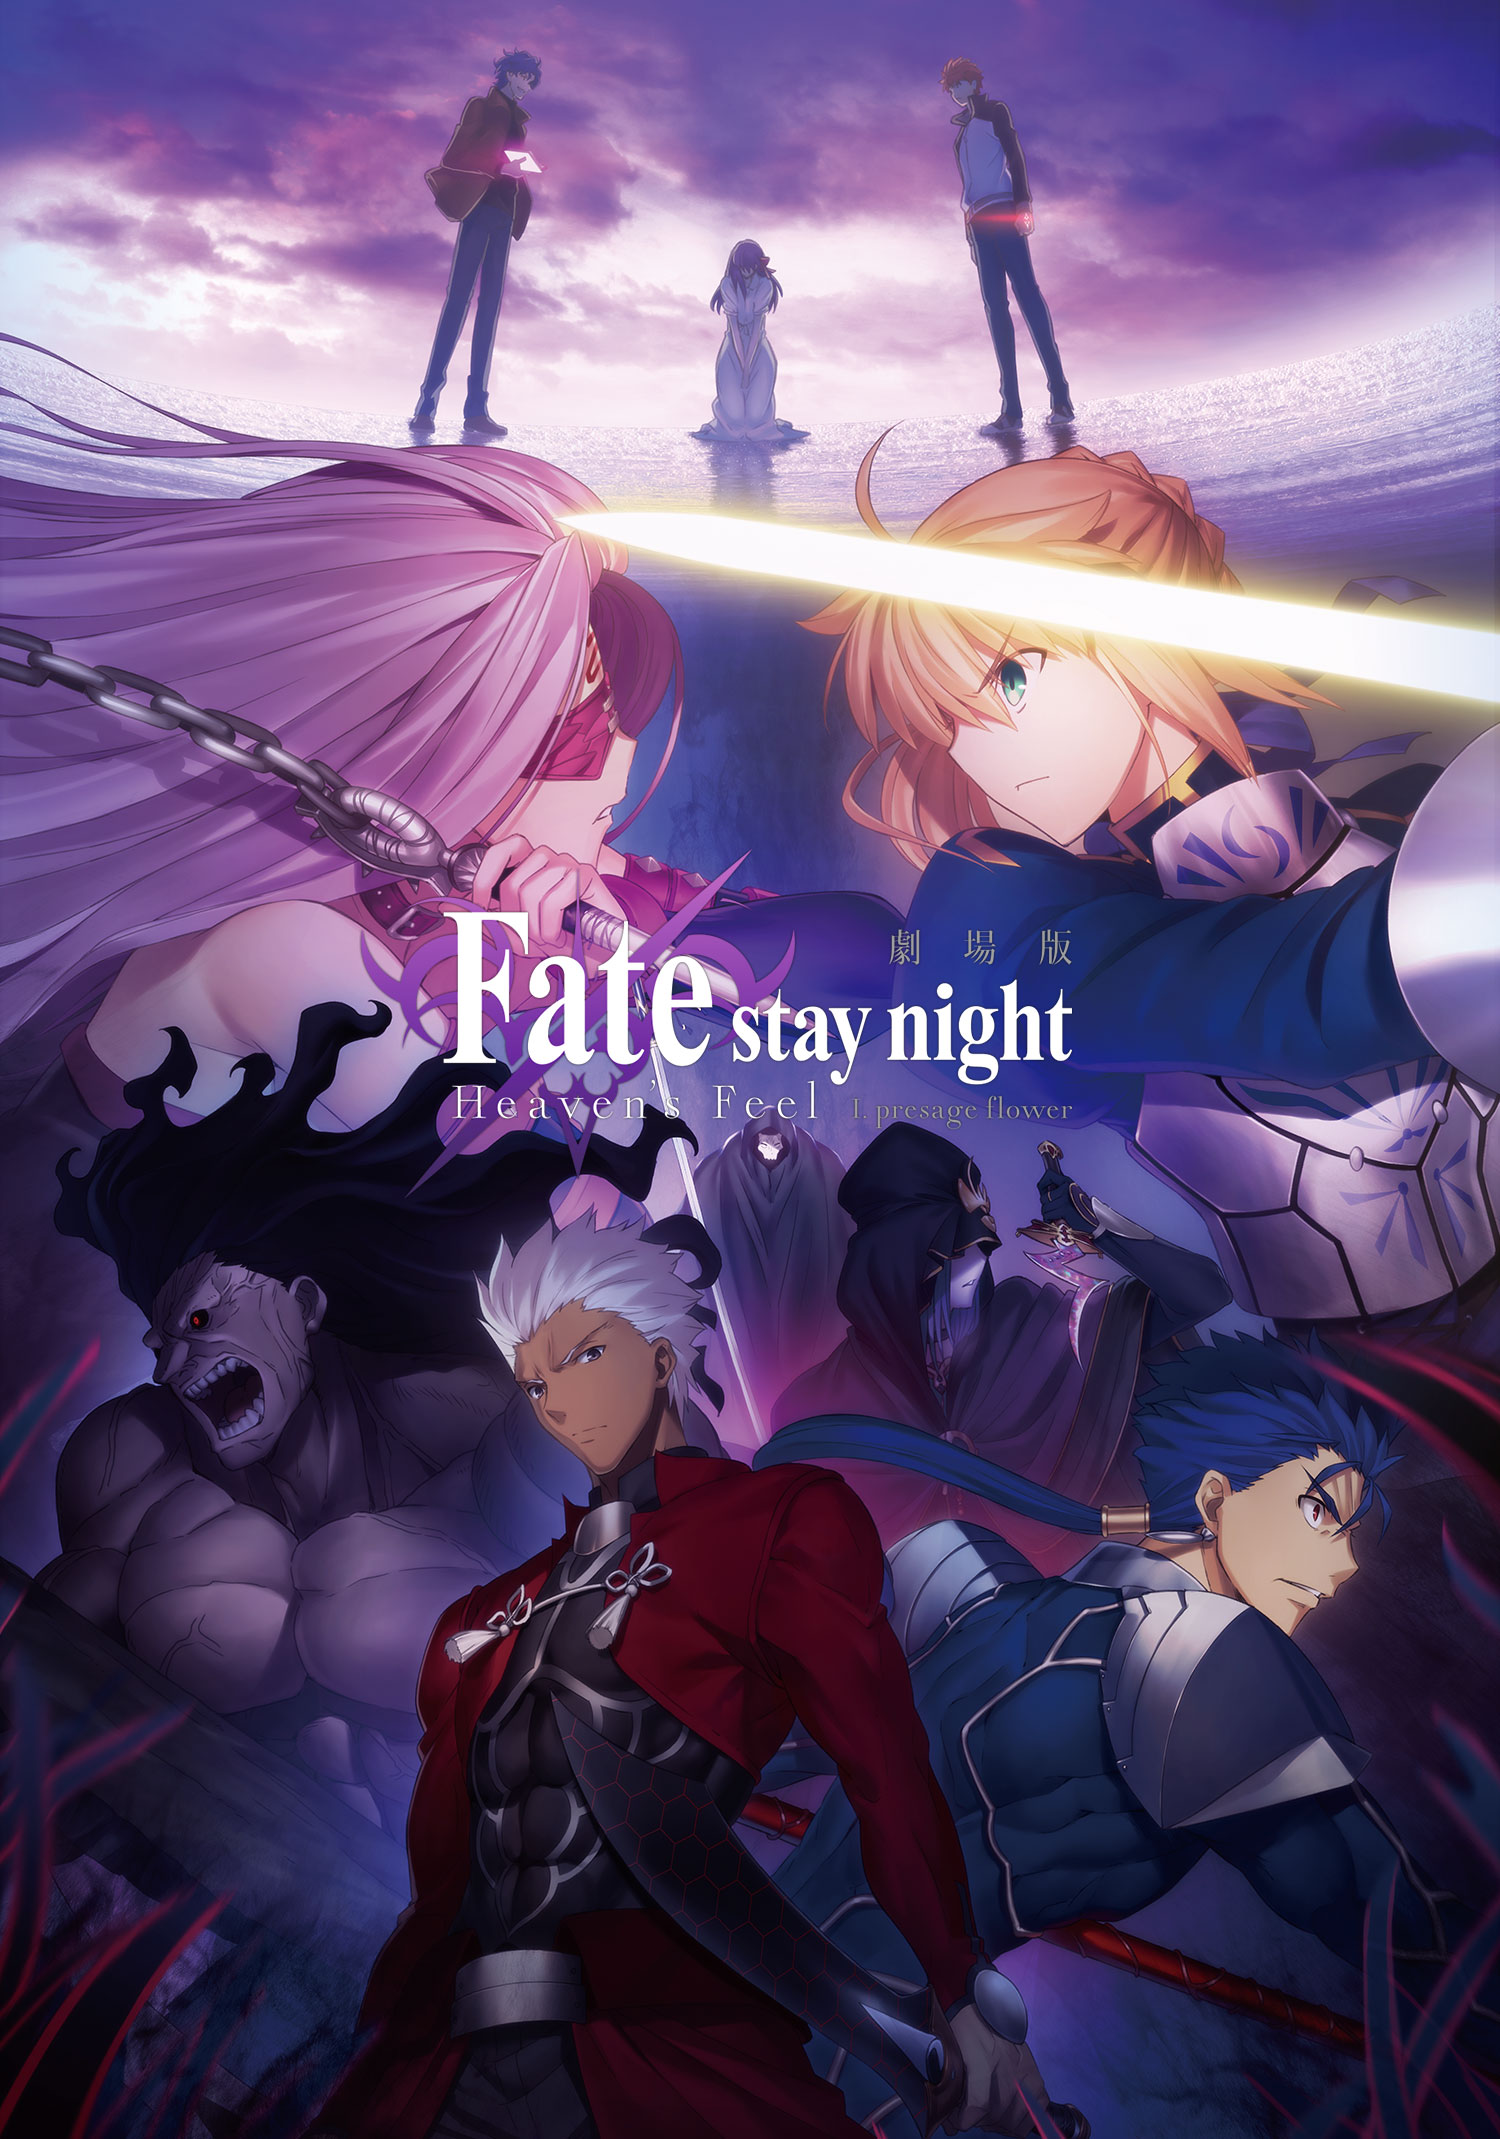 Fatestay night Unlimited Blade Works film  Wikipedia